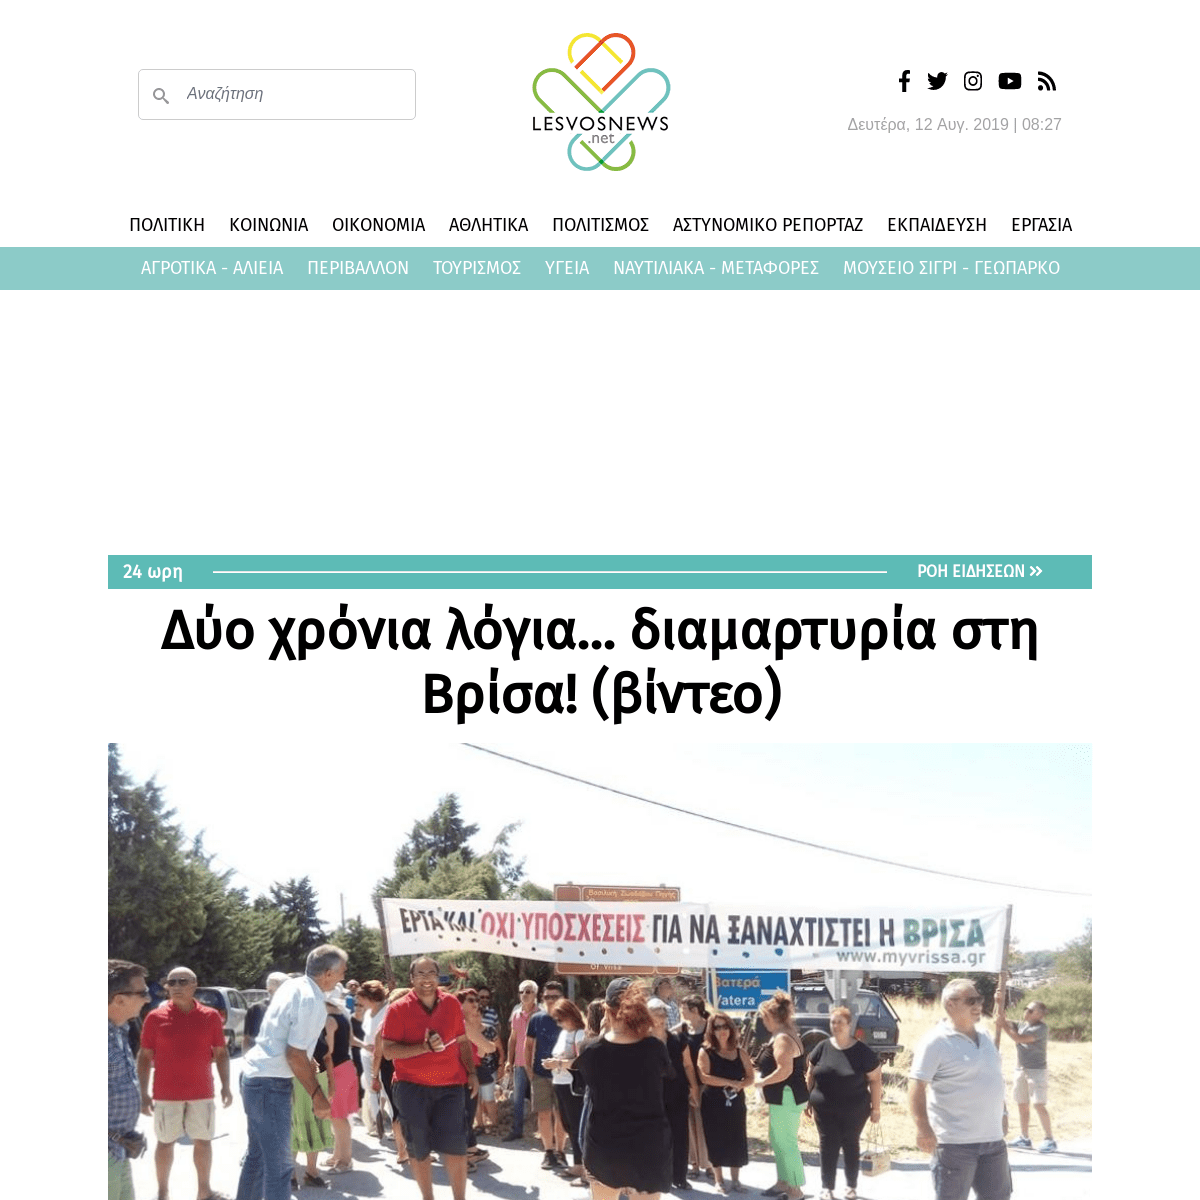 Lesvosnews.net | Ειδήσεις και νέα της Μυτιλήνης - Λέσβου